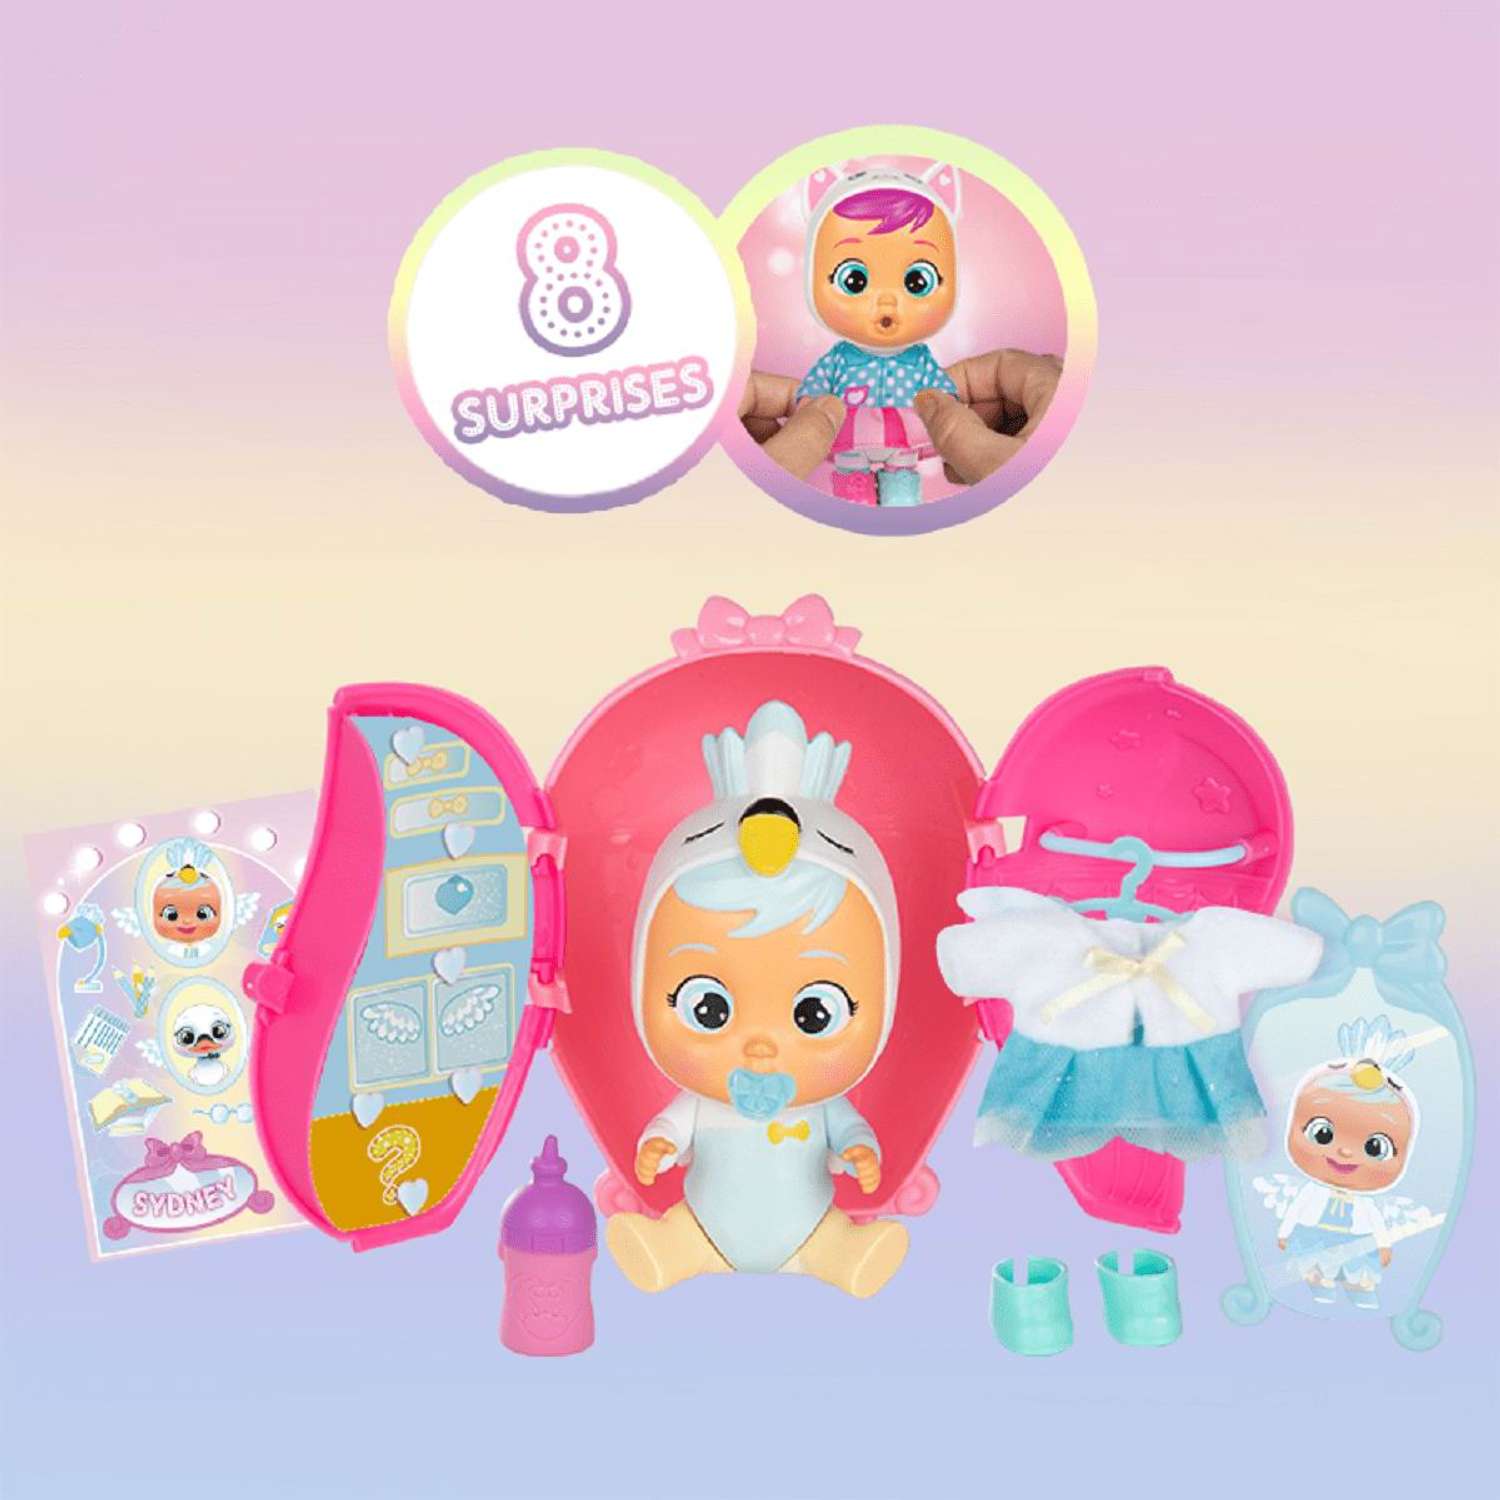 Кукла Cry Babies Magic Tears IMC Toys Плачущий младенец серия DRESS ME UP в комплекте с домиком и аксессуарами 81970 - фото 5